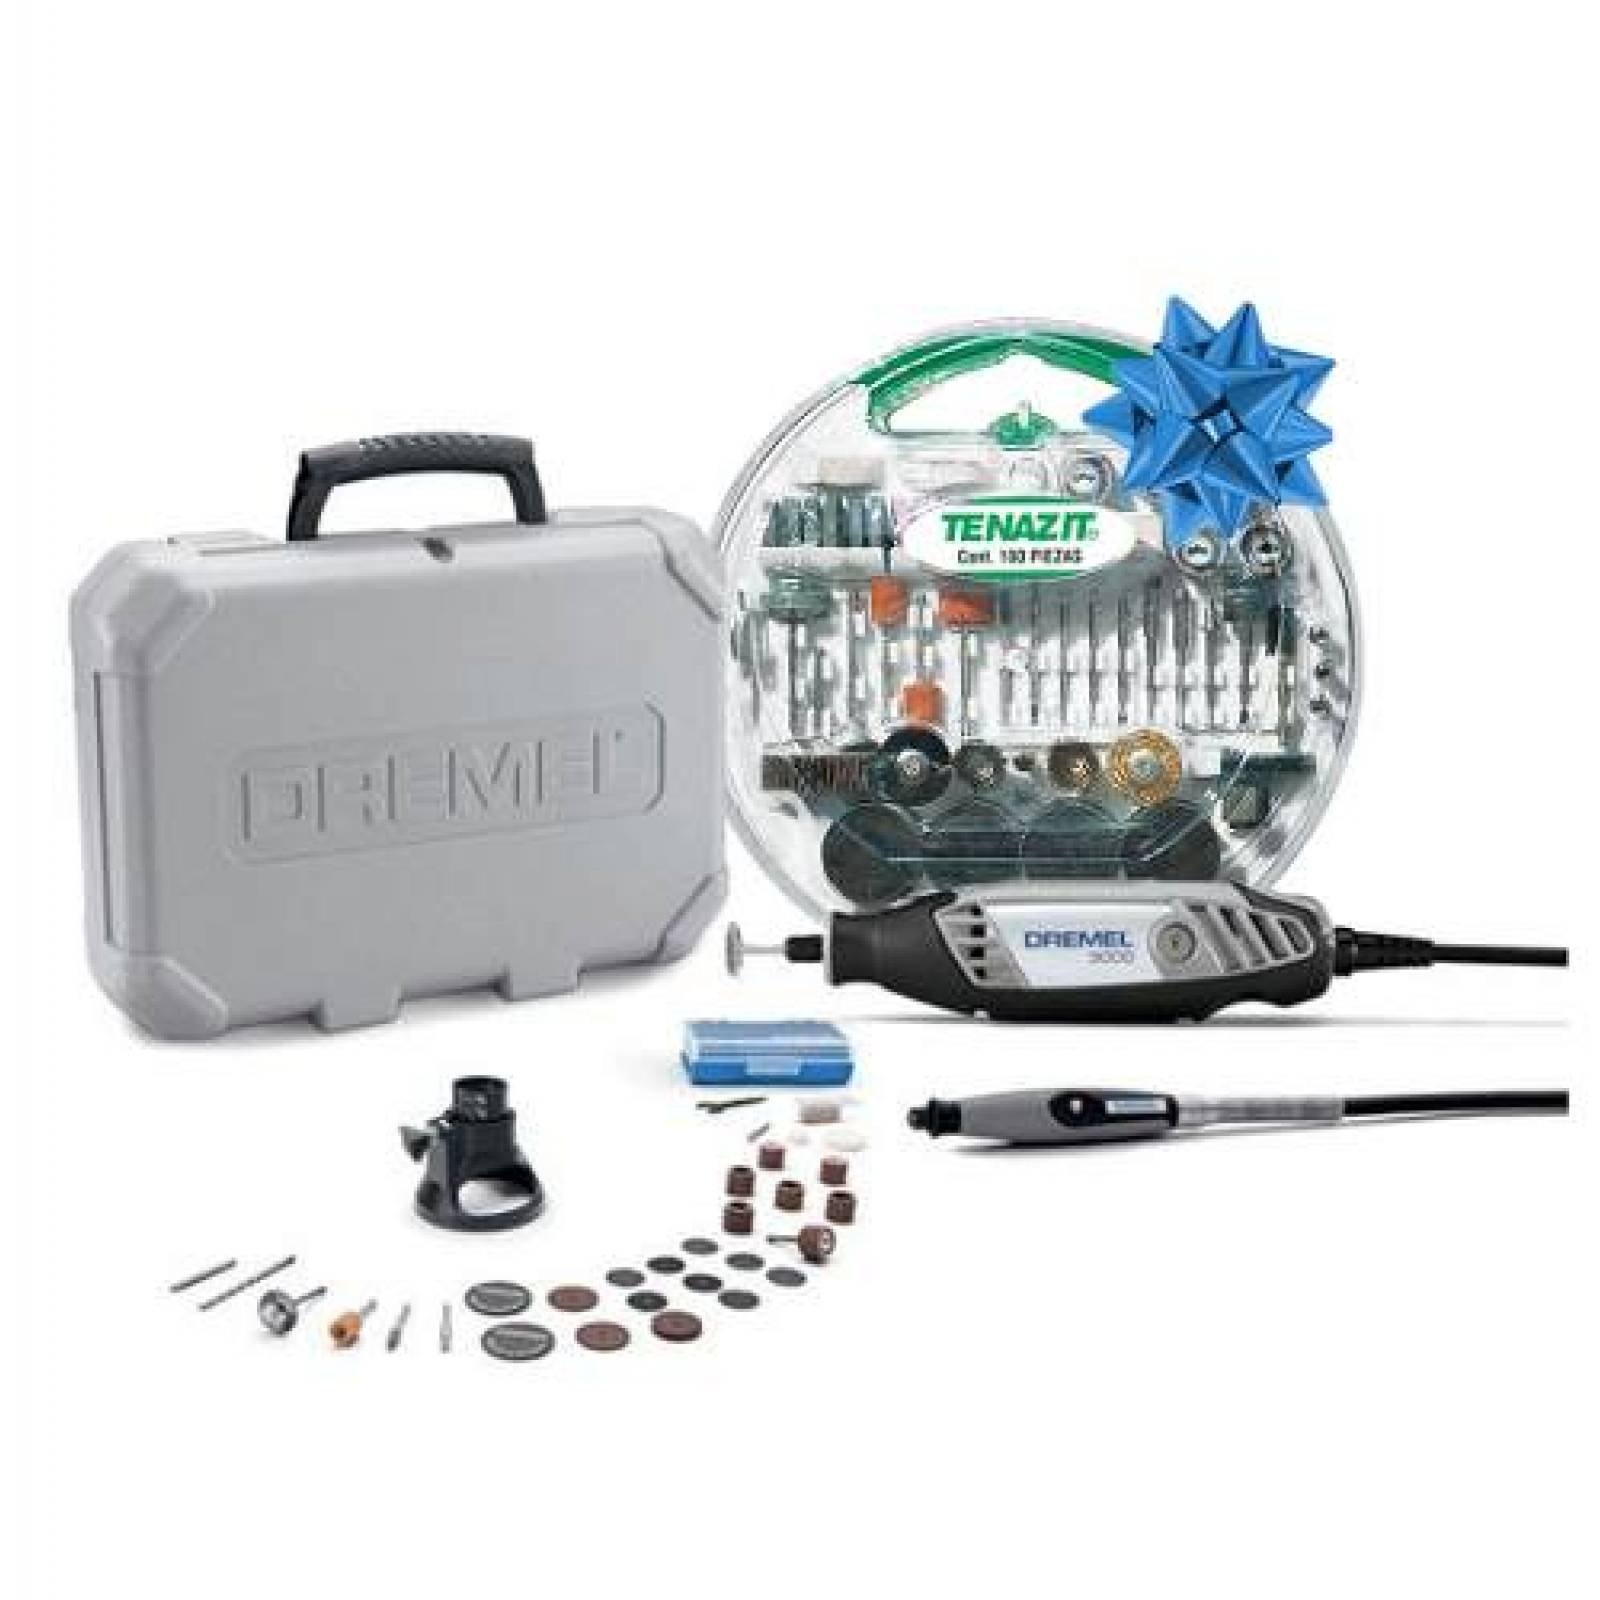 Kit Mototool Dremel 3000 + Kit B&d Accesorios 180 pz Dremel